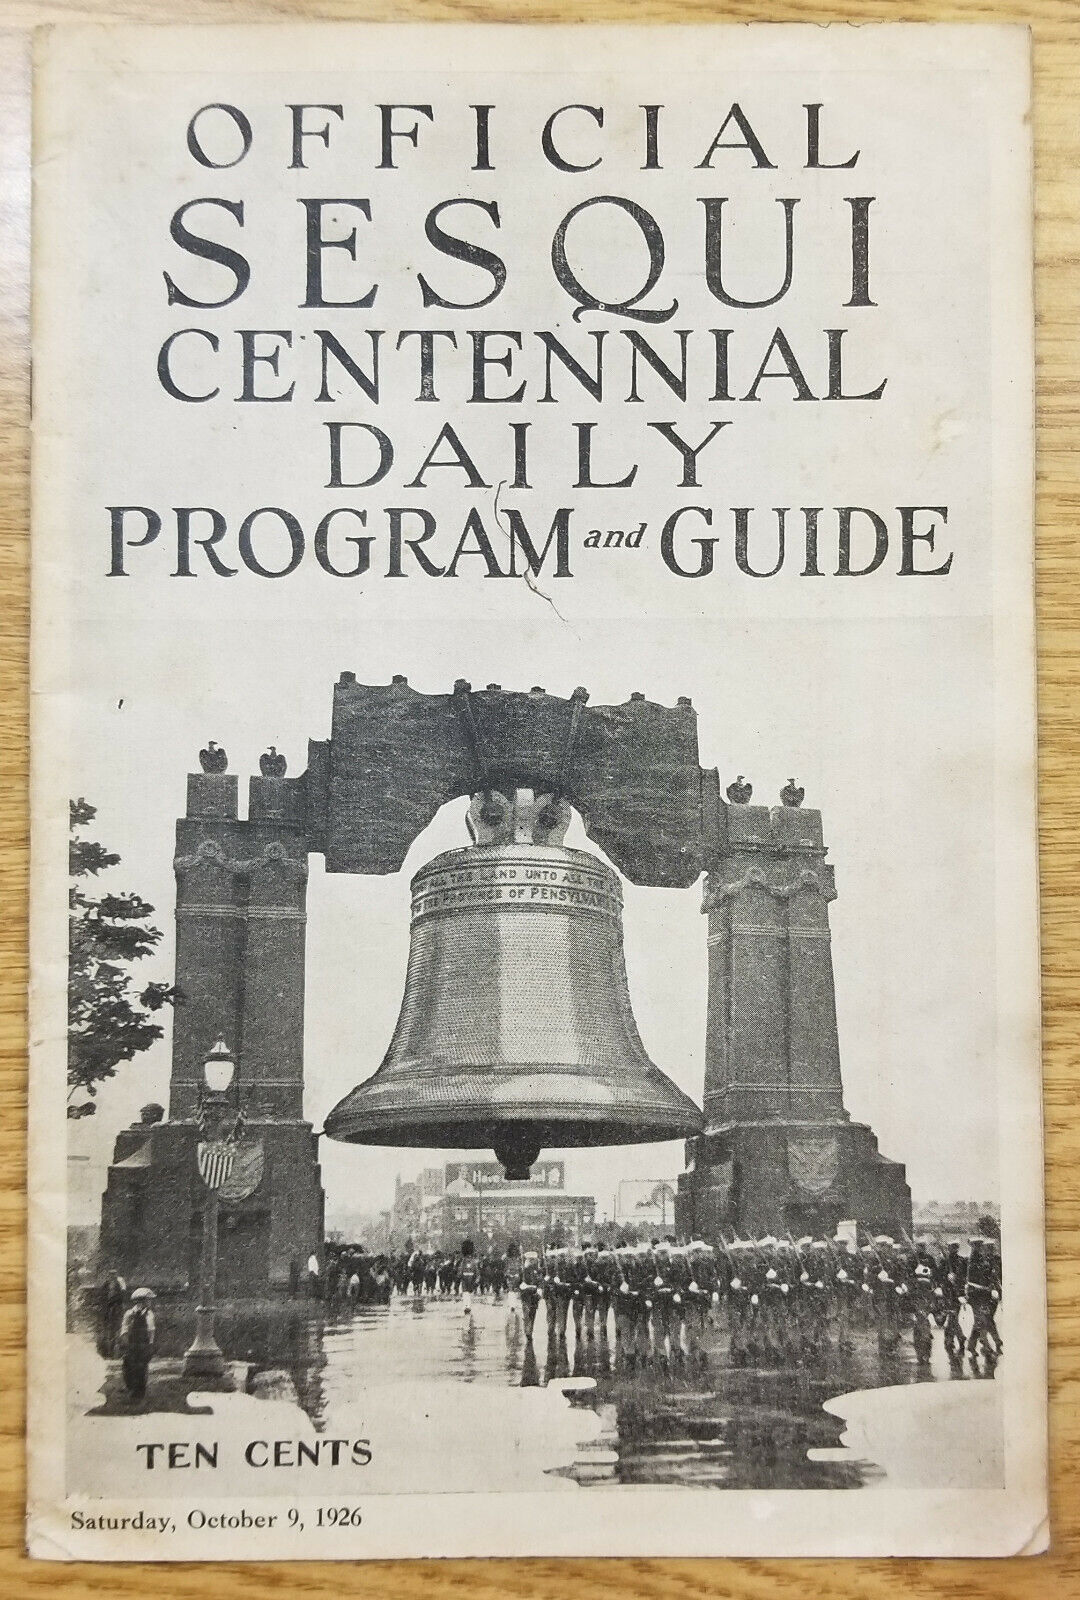 Official Sesquicentennial Daily Program & Guide 10/9/26 Philadelphia vintage ads